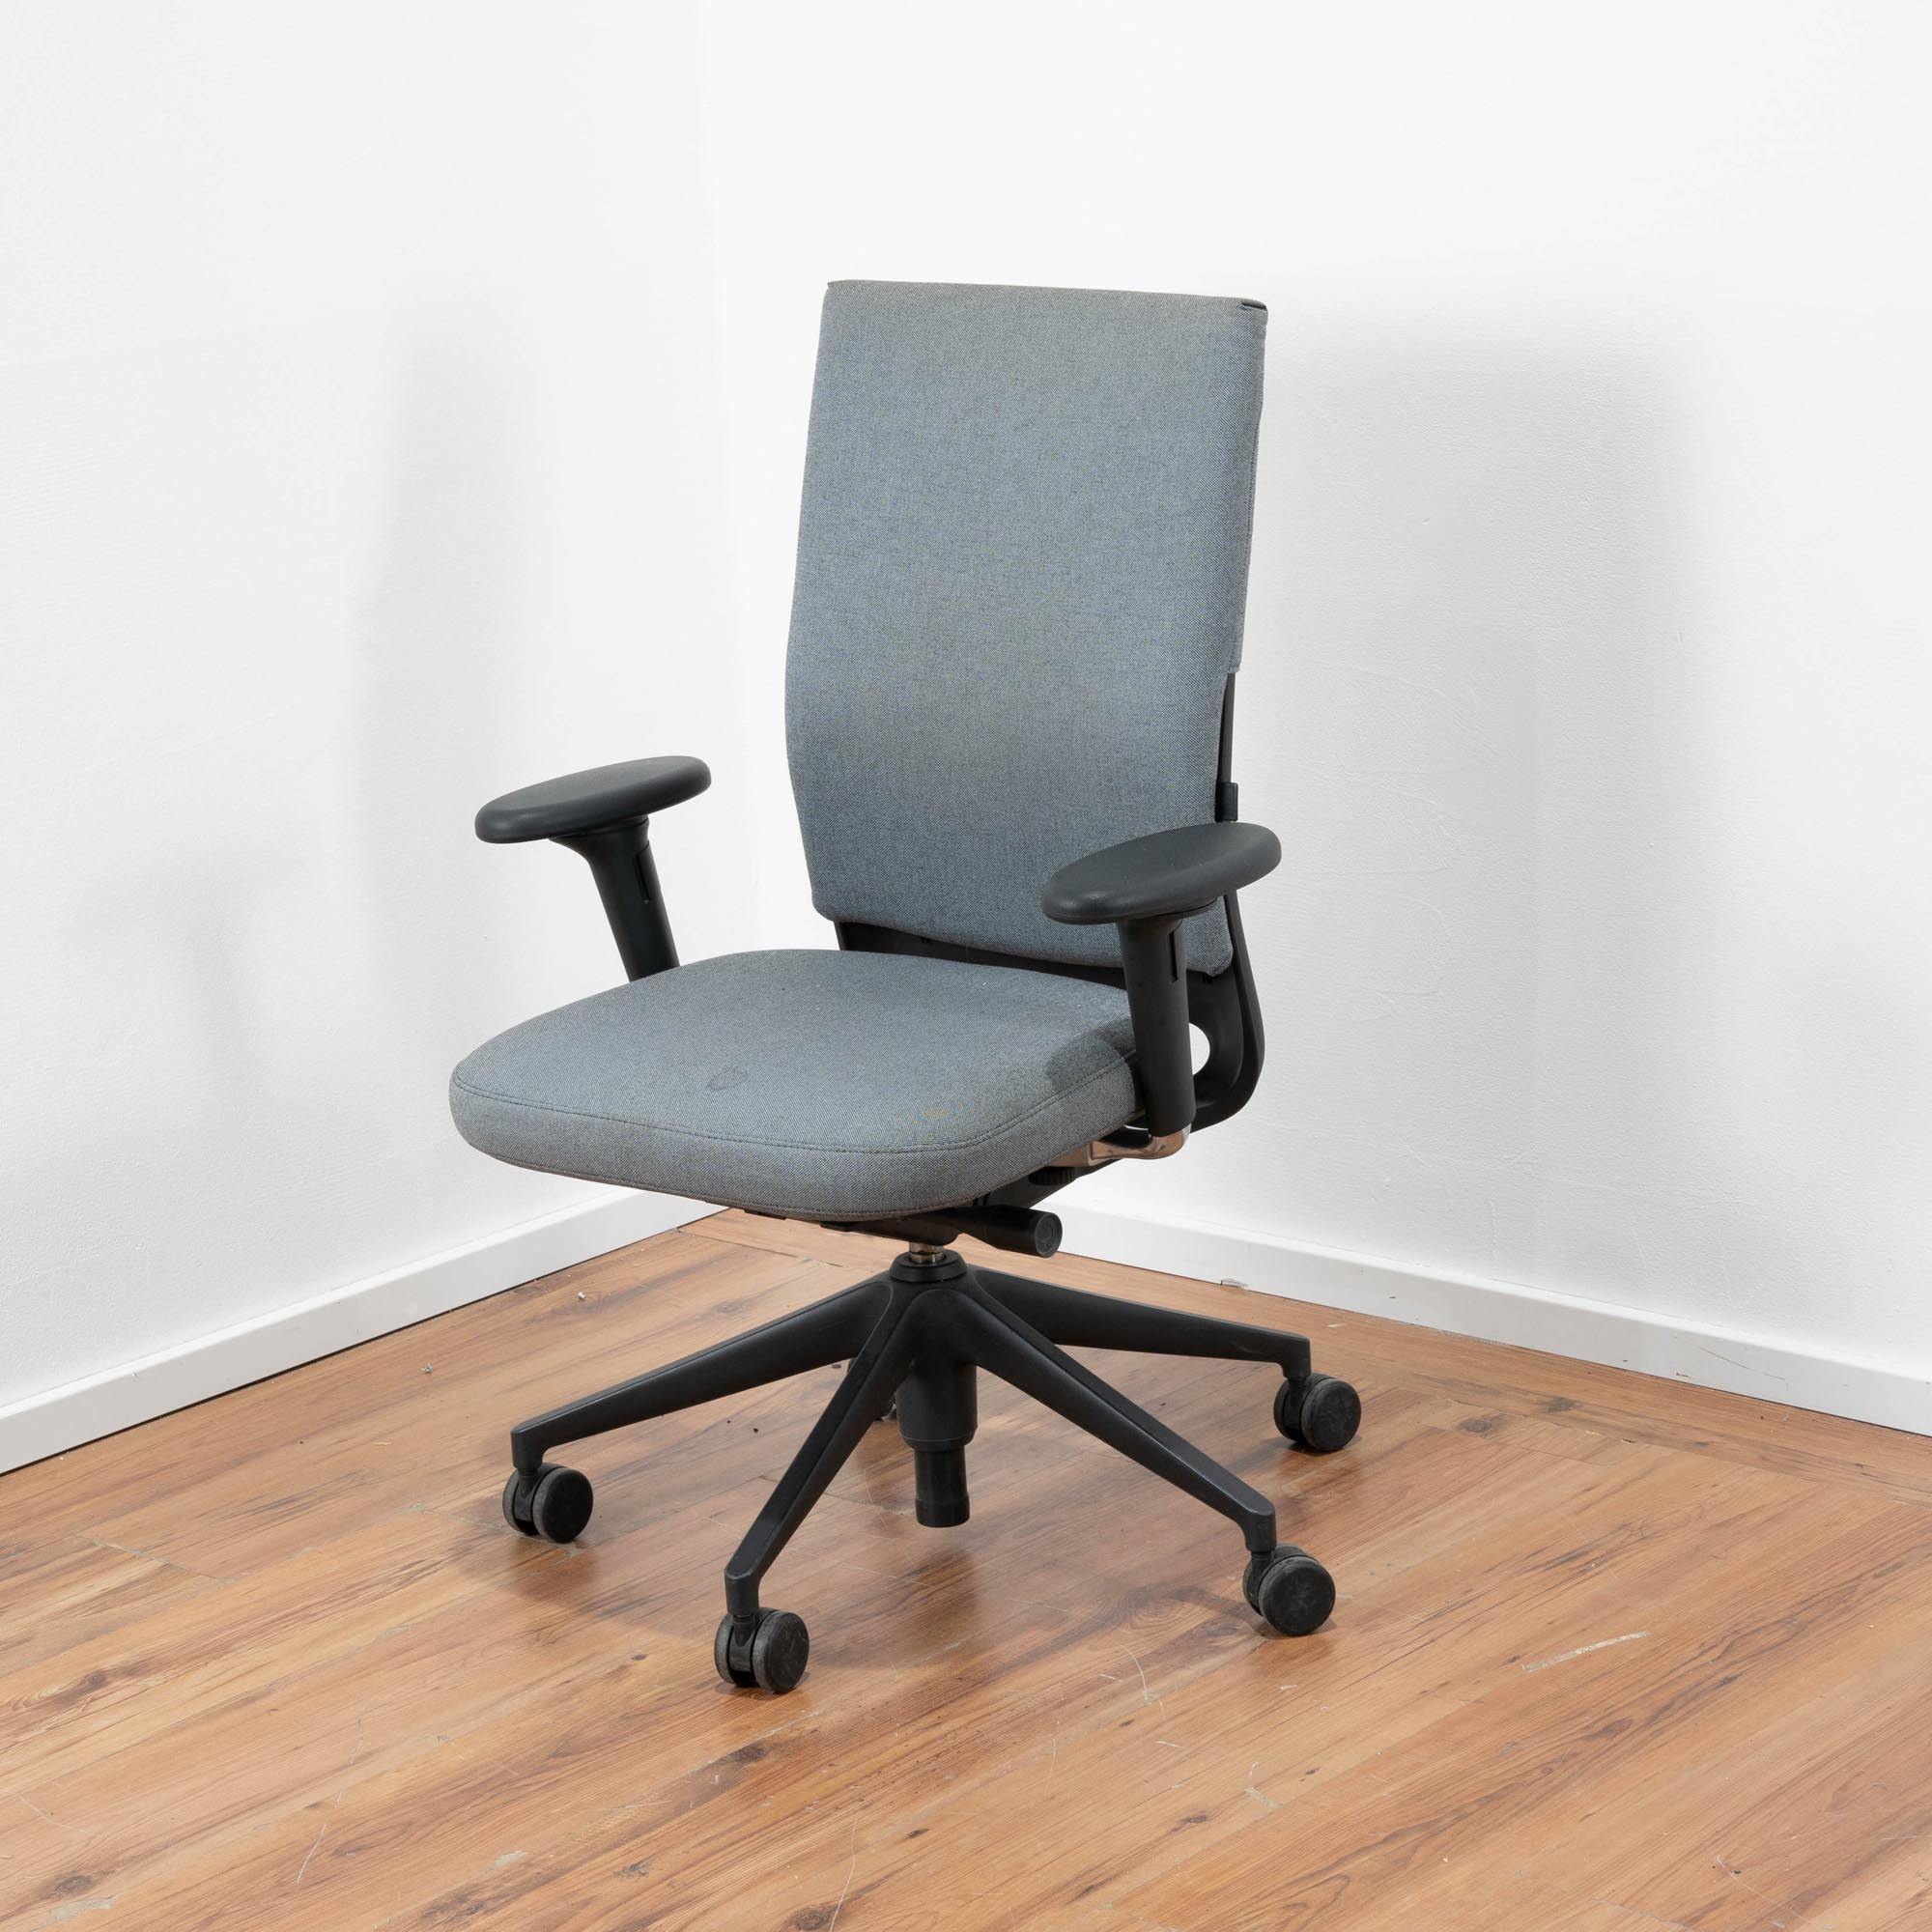 Vitra "ID Chair" Bürodrehstuhl - Sitzpolster Stoff grau - Netzrücken Stoff grau- 5-Fuß Gestell schwarz 